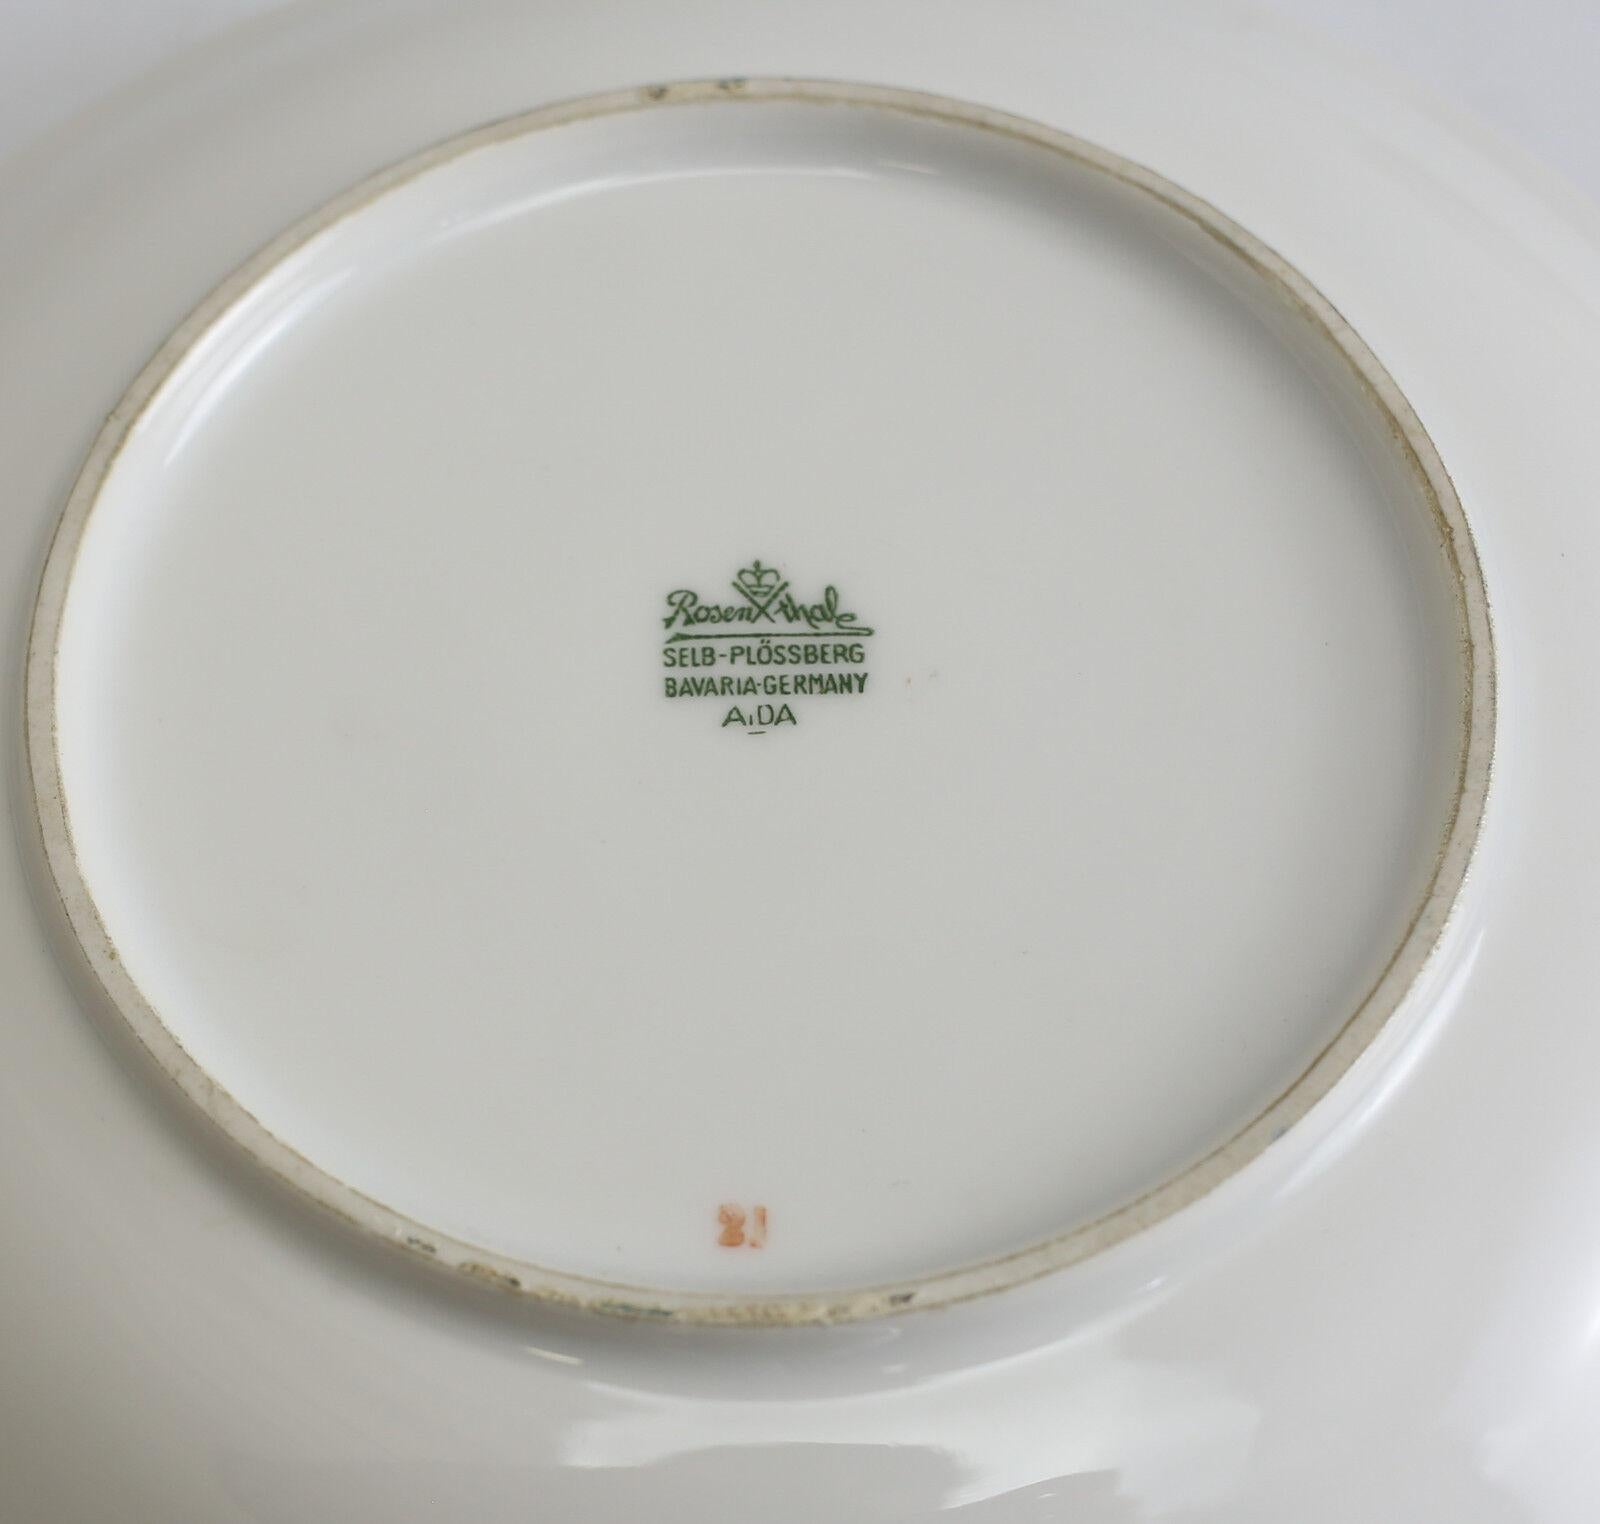 Rosenthal Porcelain Covered Butter Dish Aida Monogramm Saddam Hussein Al Naseri For Sale 1